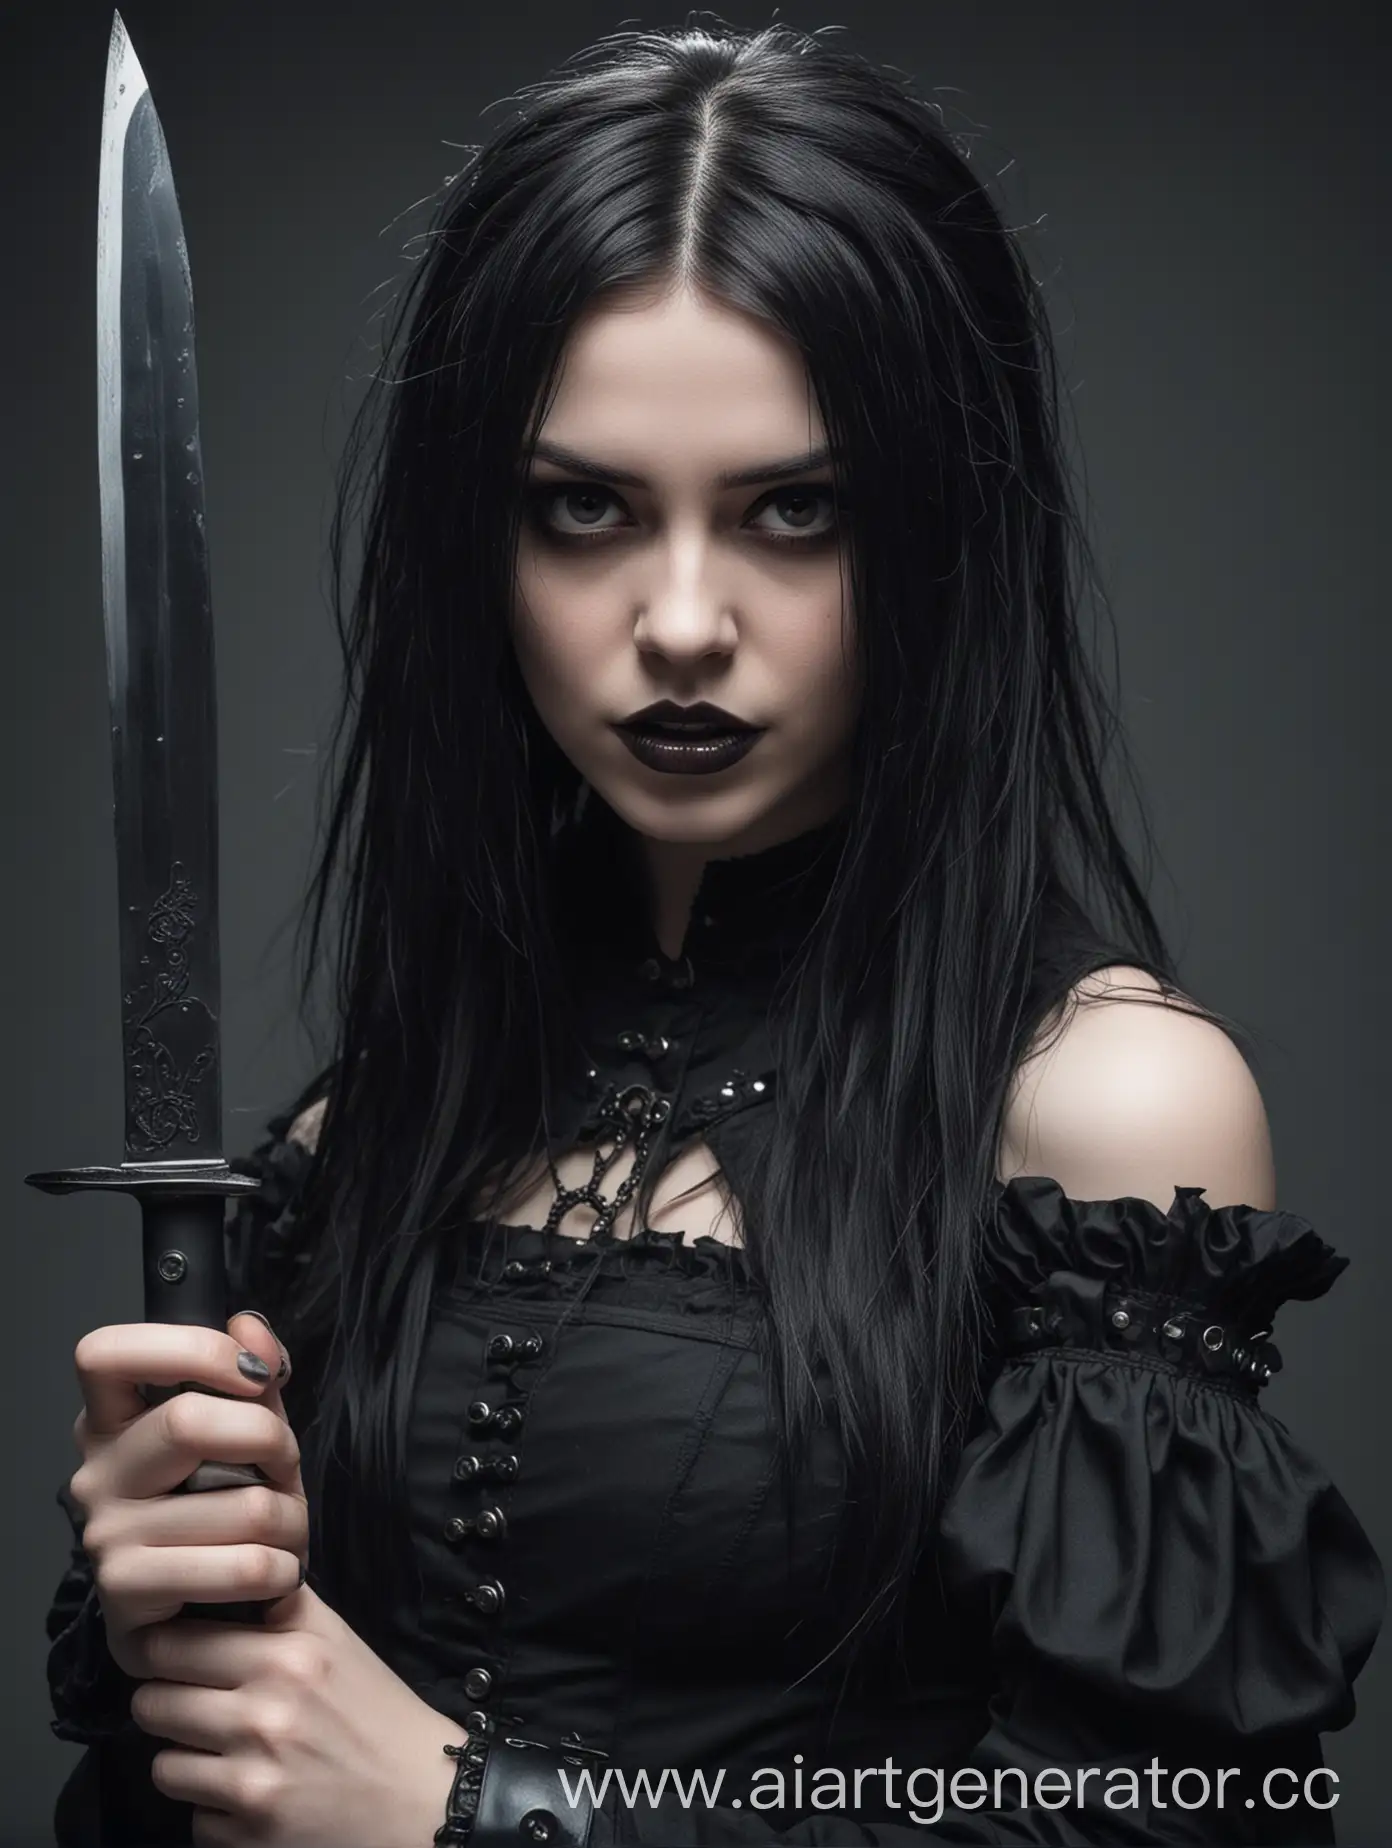 Beautiful-Gothic-Woman-Holding-Knife